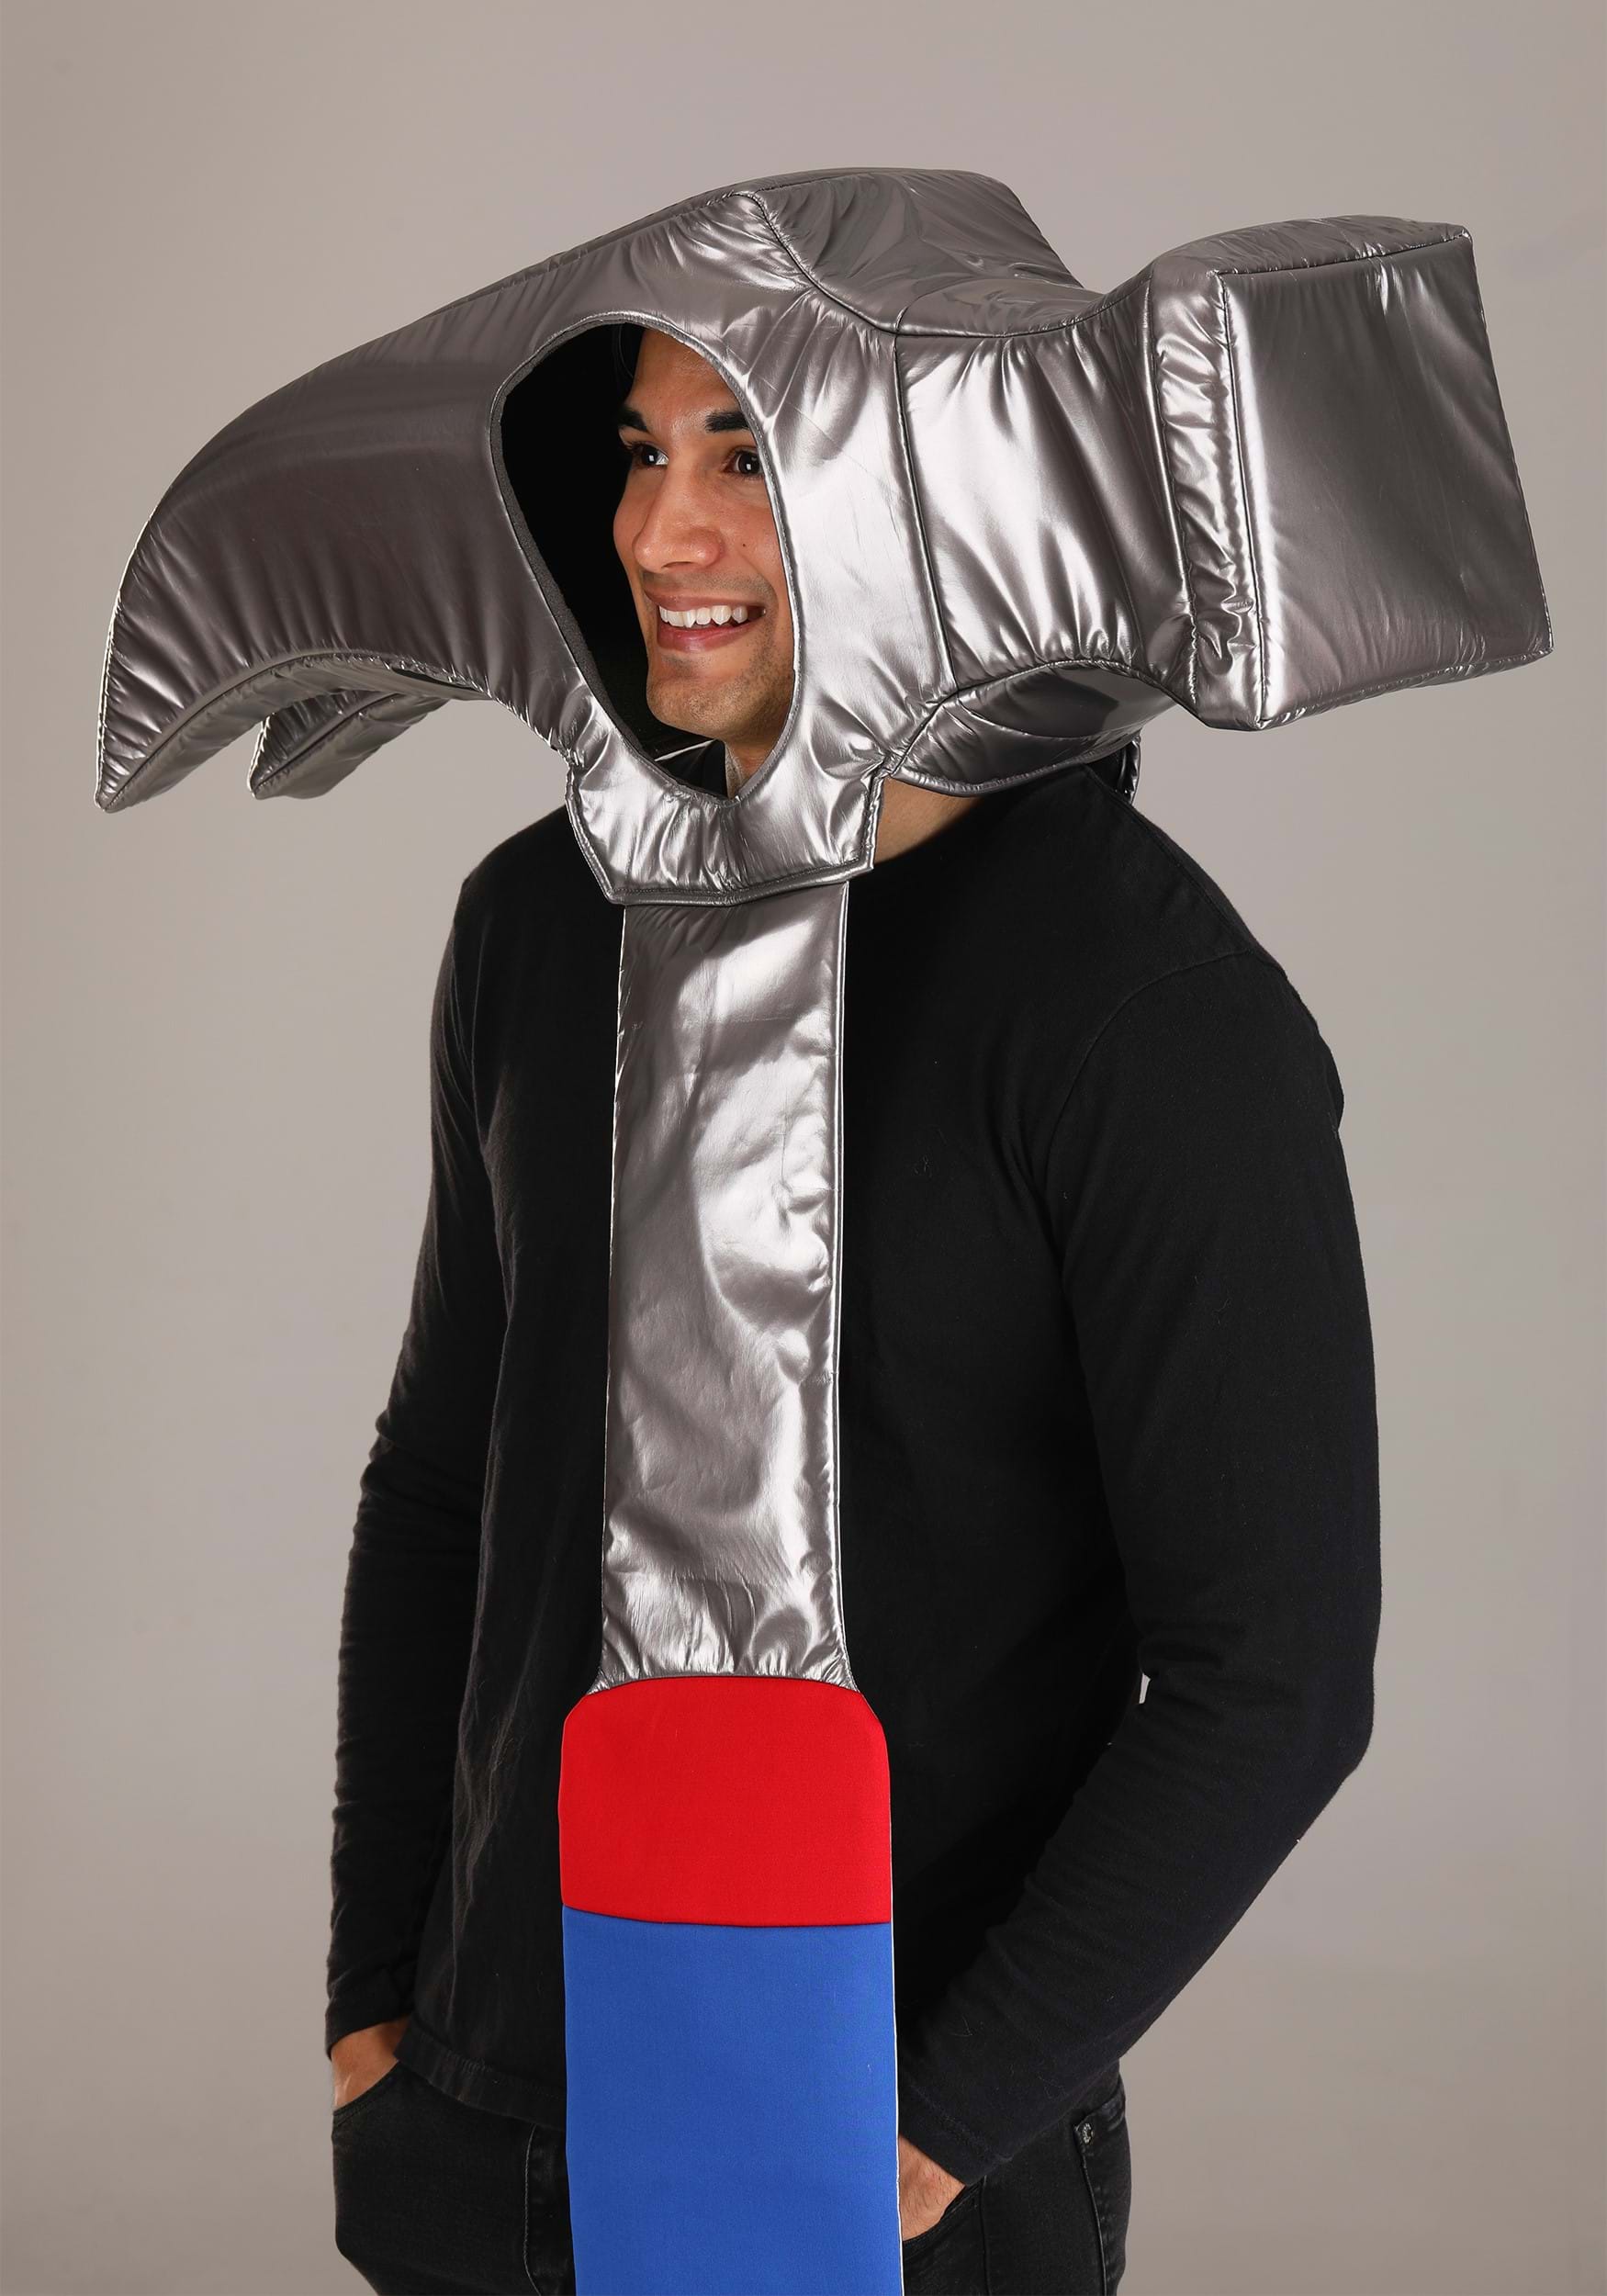 Hammer Adult Costume